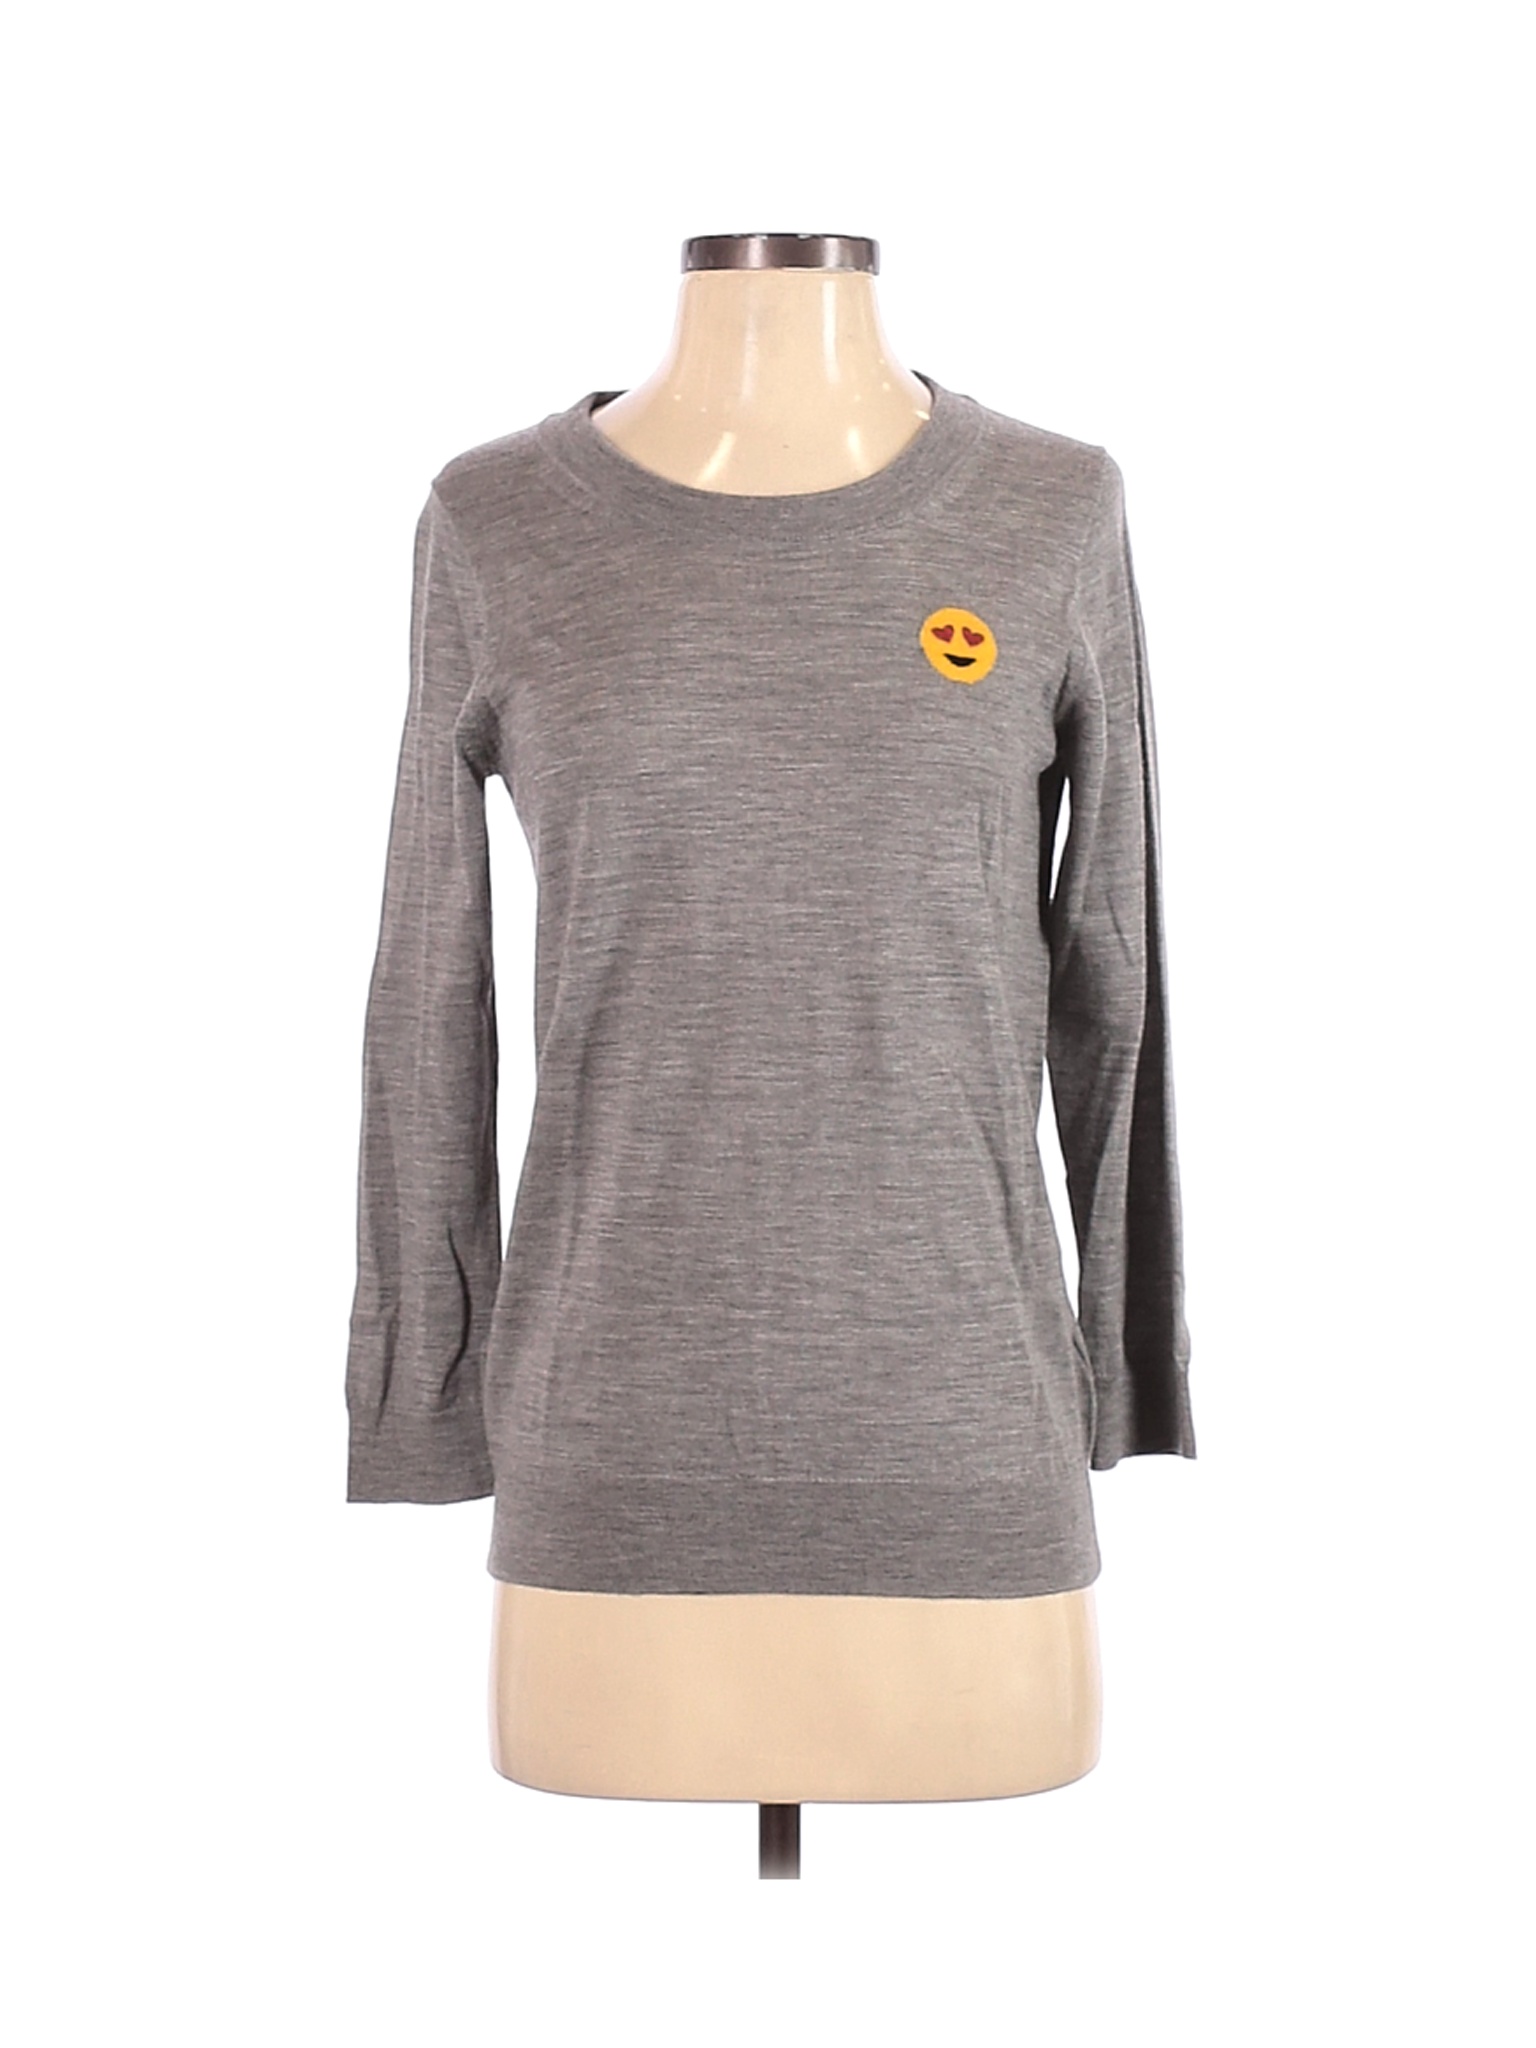 J.Crew Women Gray Wool Pullover Sweater S | eBay